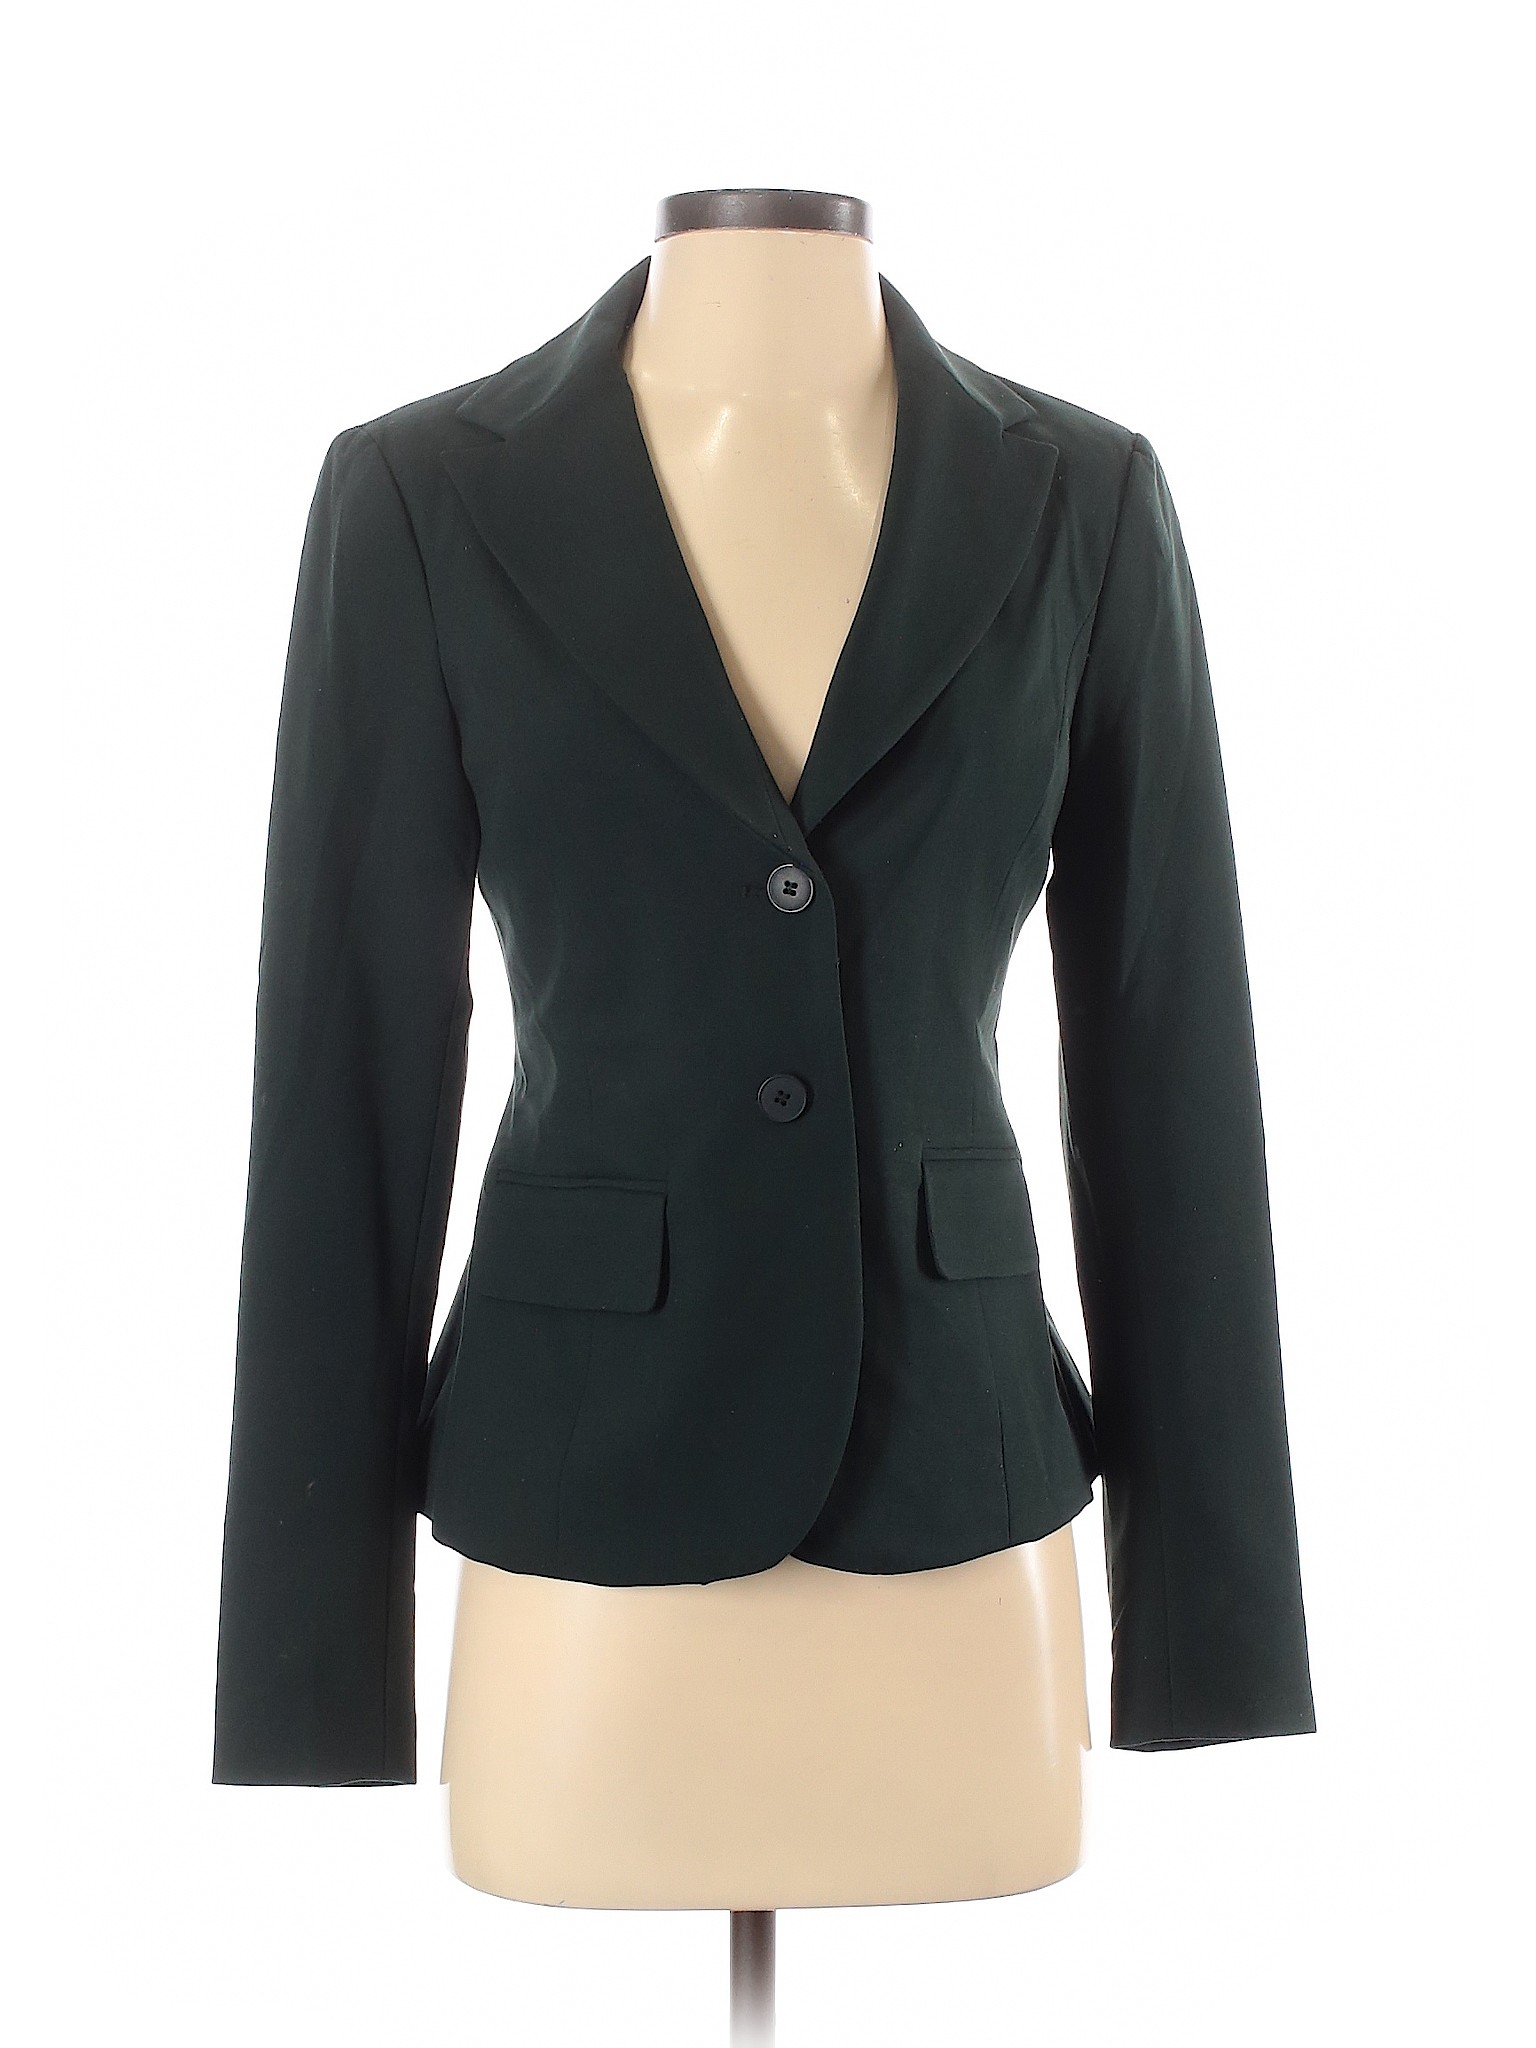 New York & Company Women Black Blazer 2 | eBay